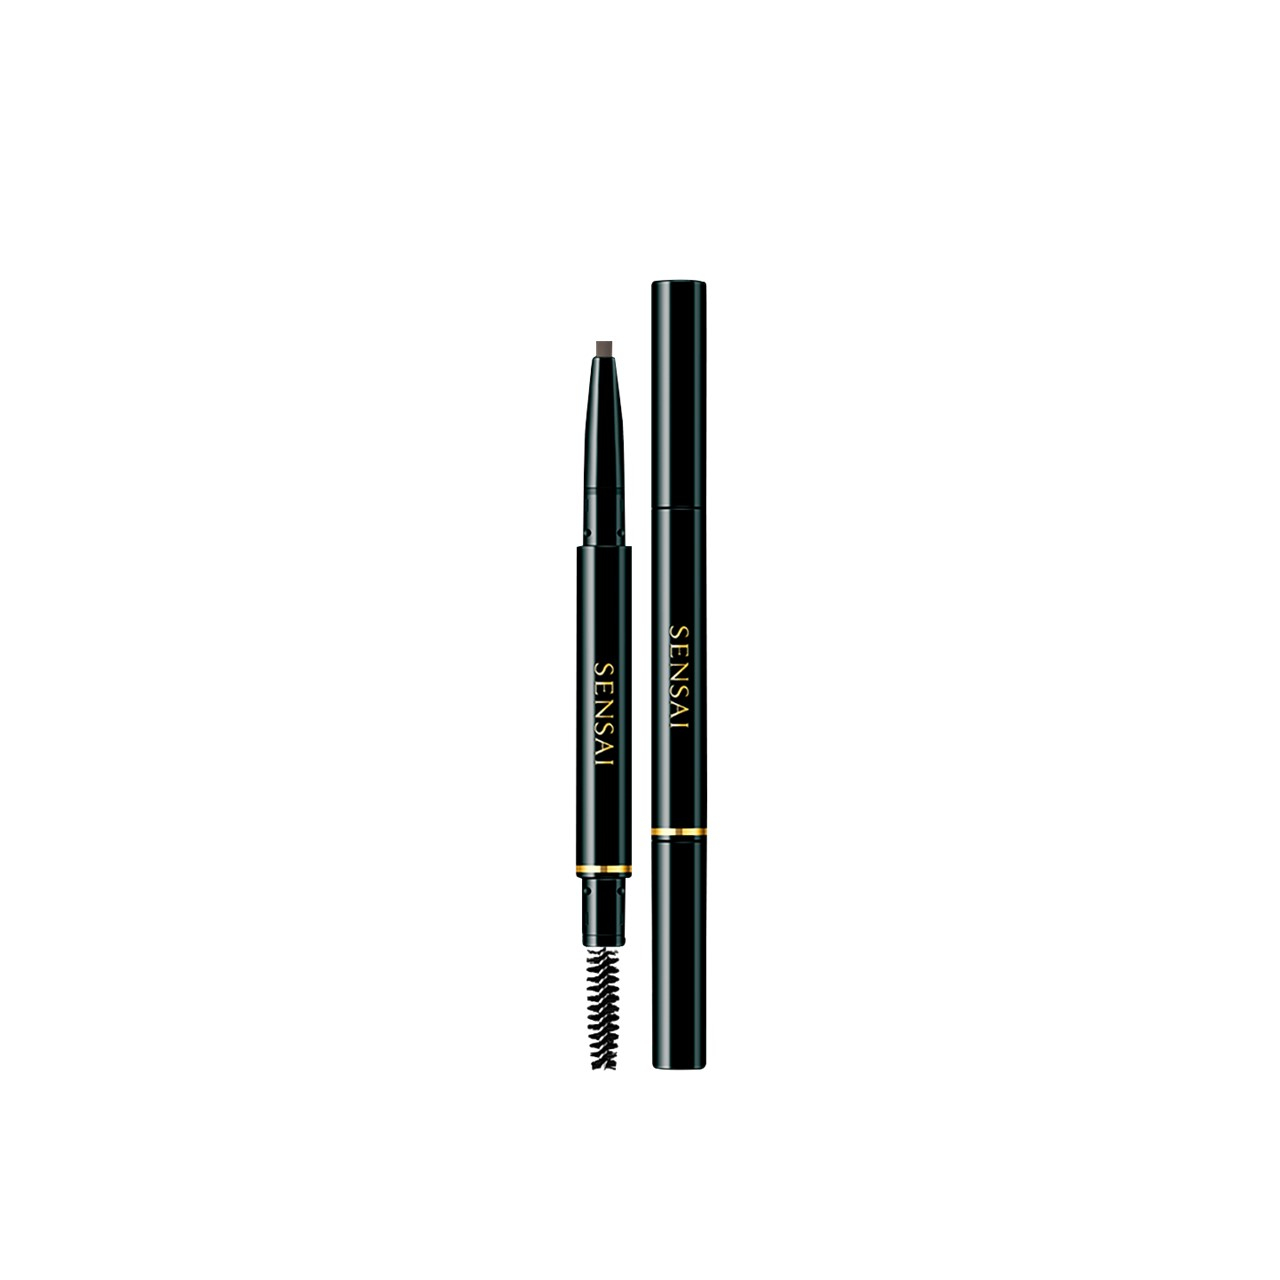 SENSAI Styling Eyebrow Pencil 01 Dark Brown 0.2g